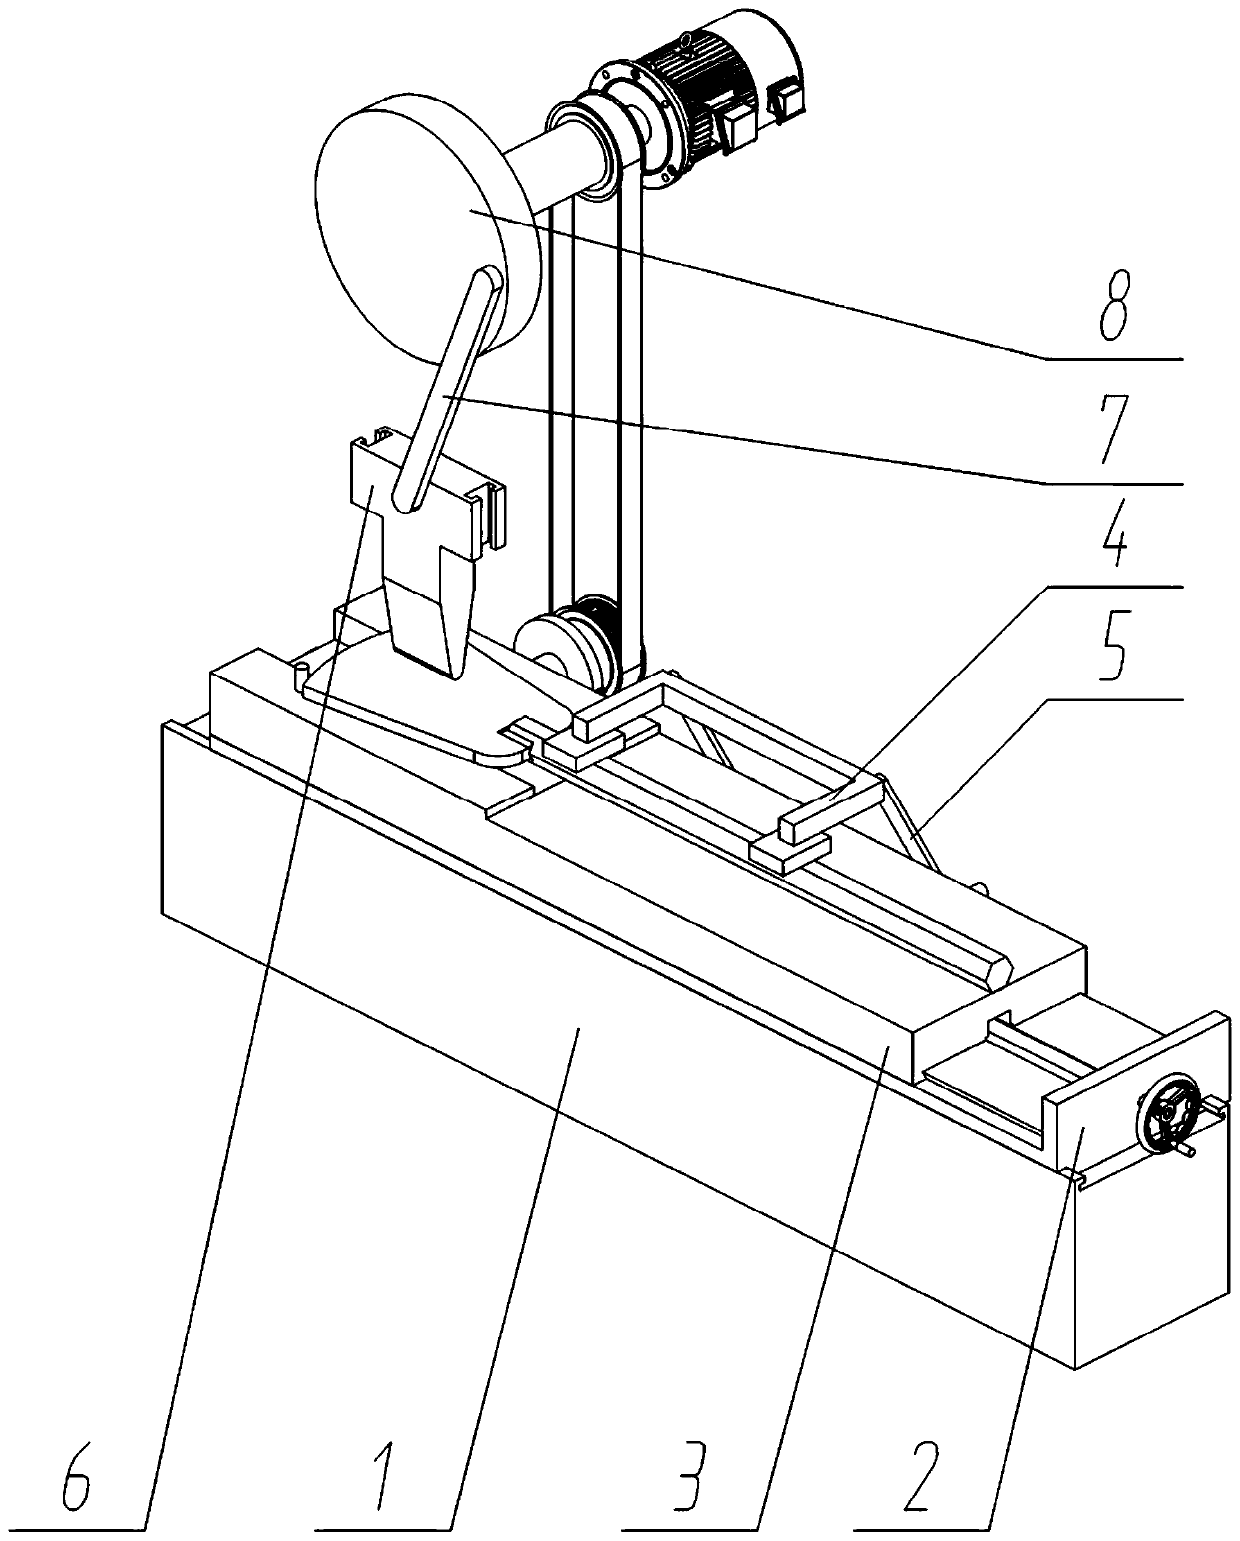 Middle hammering device for forging Luoyang shovel